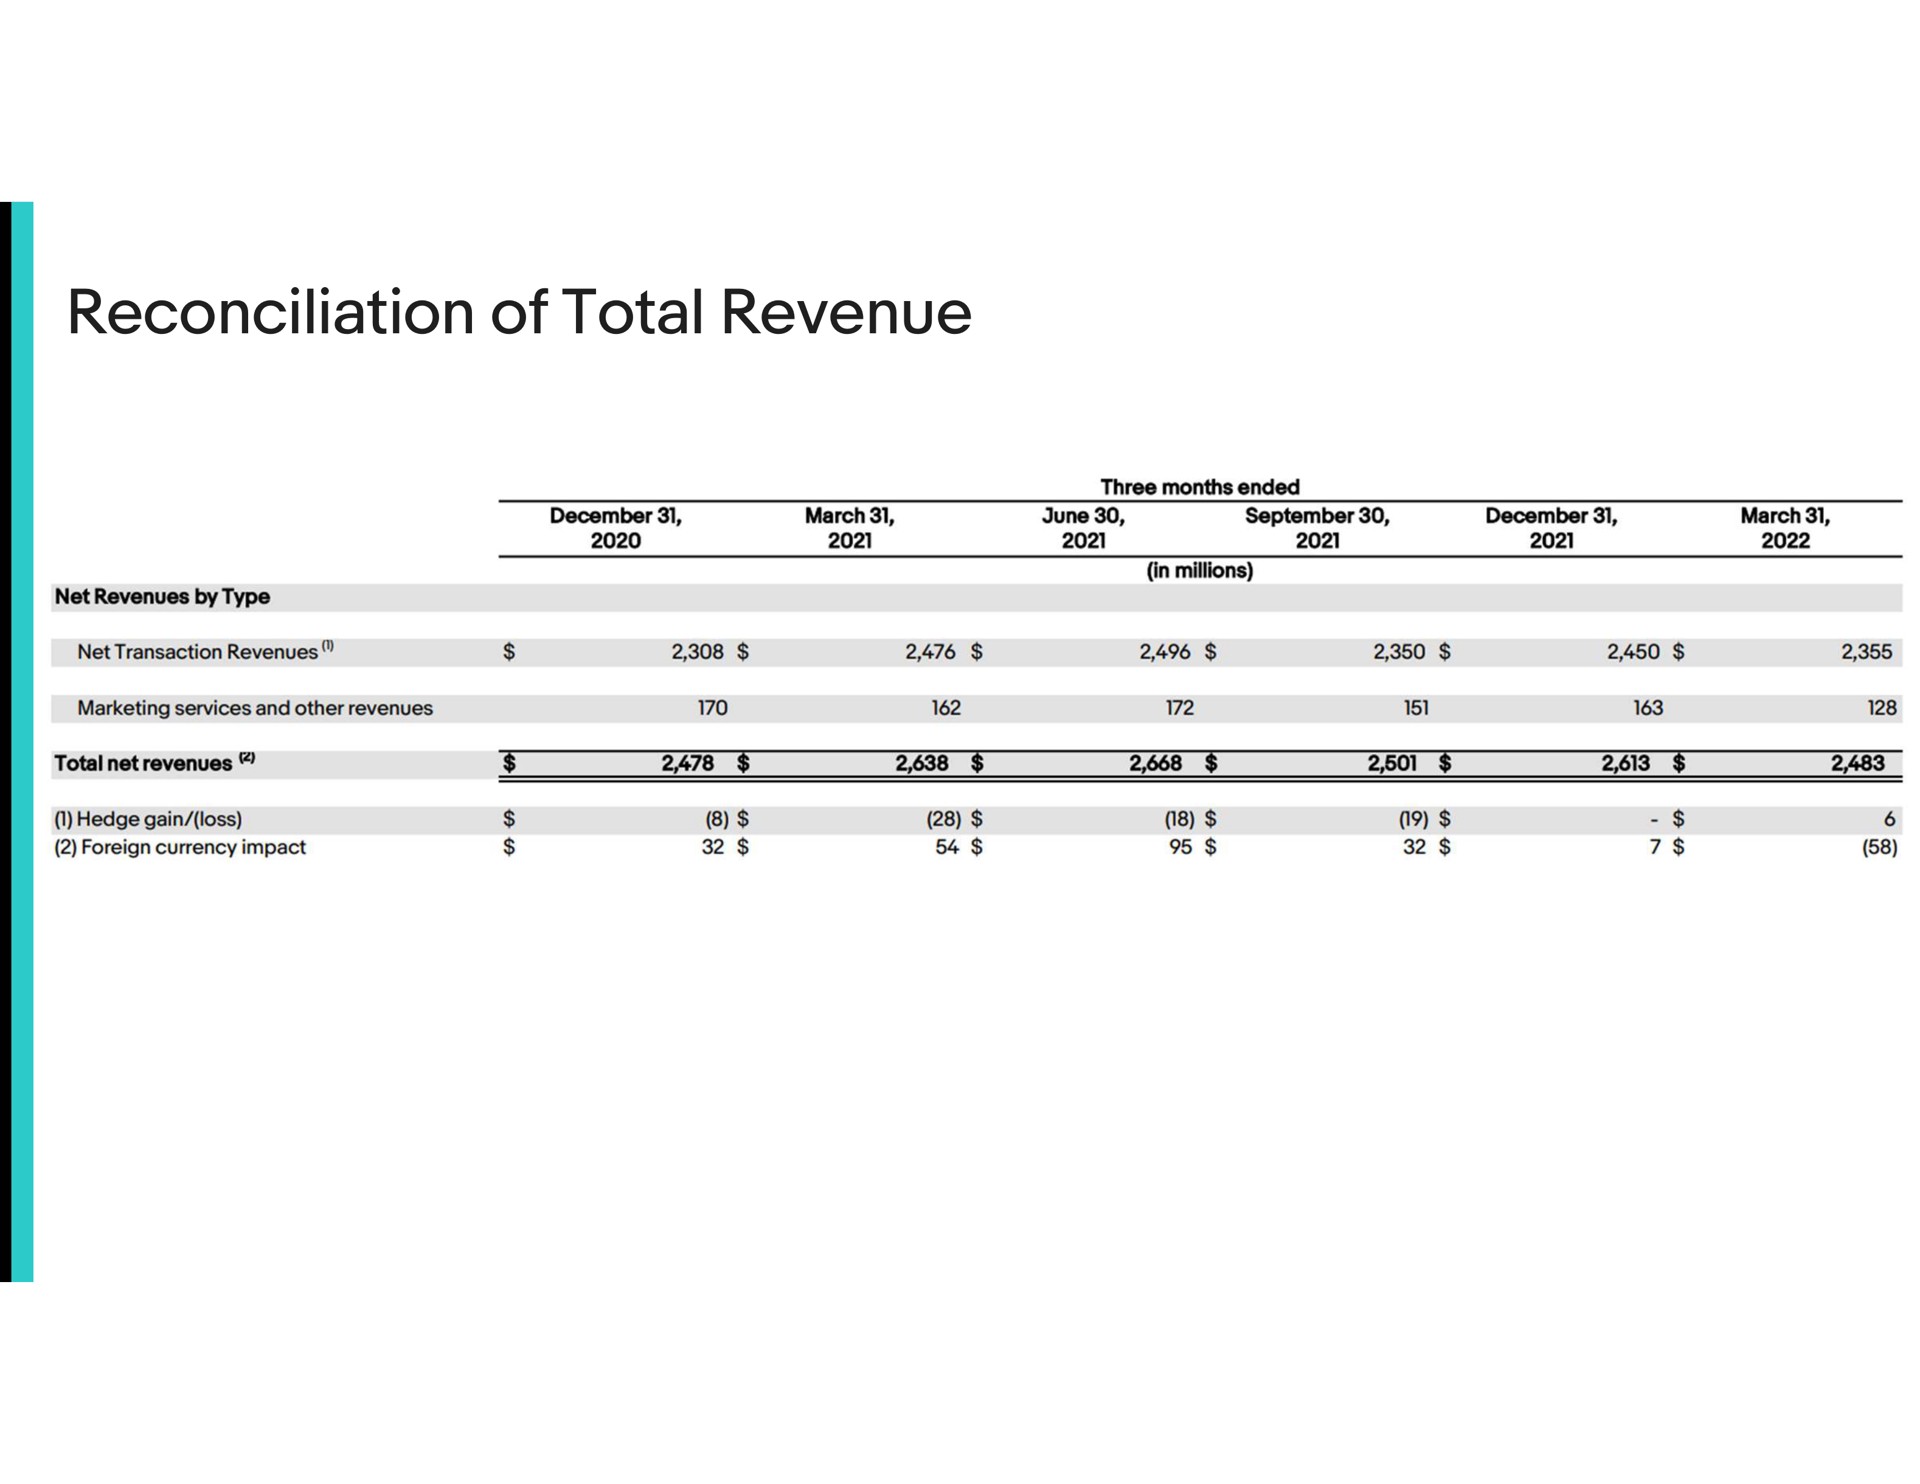 reconciliation of total revenue | eBay